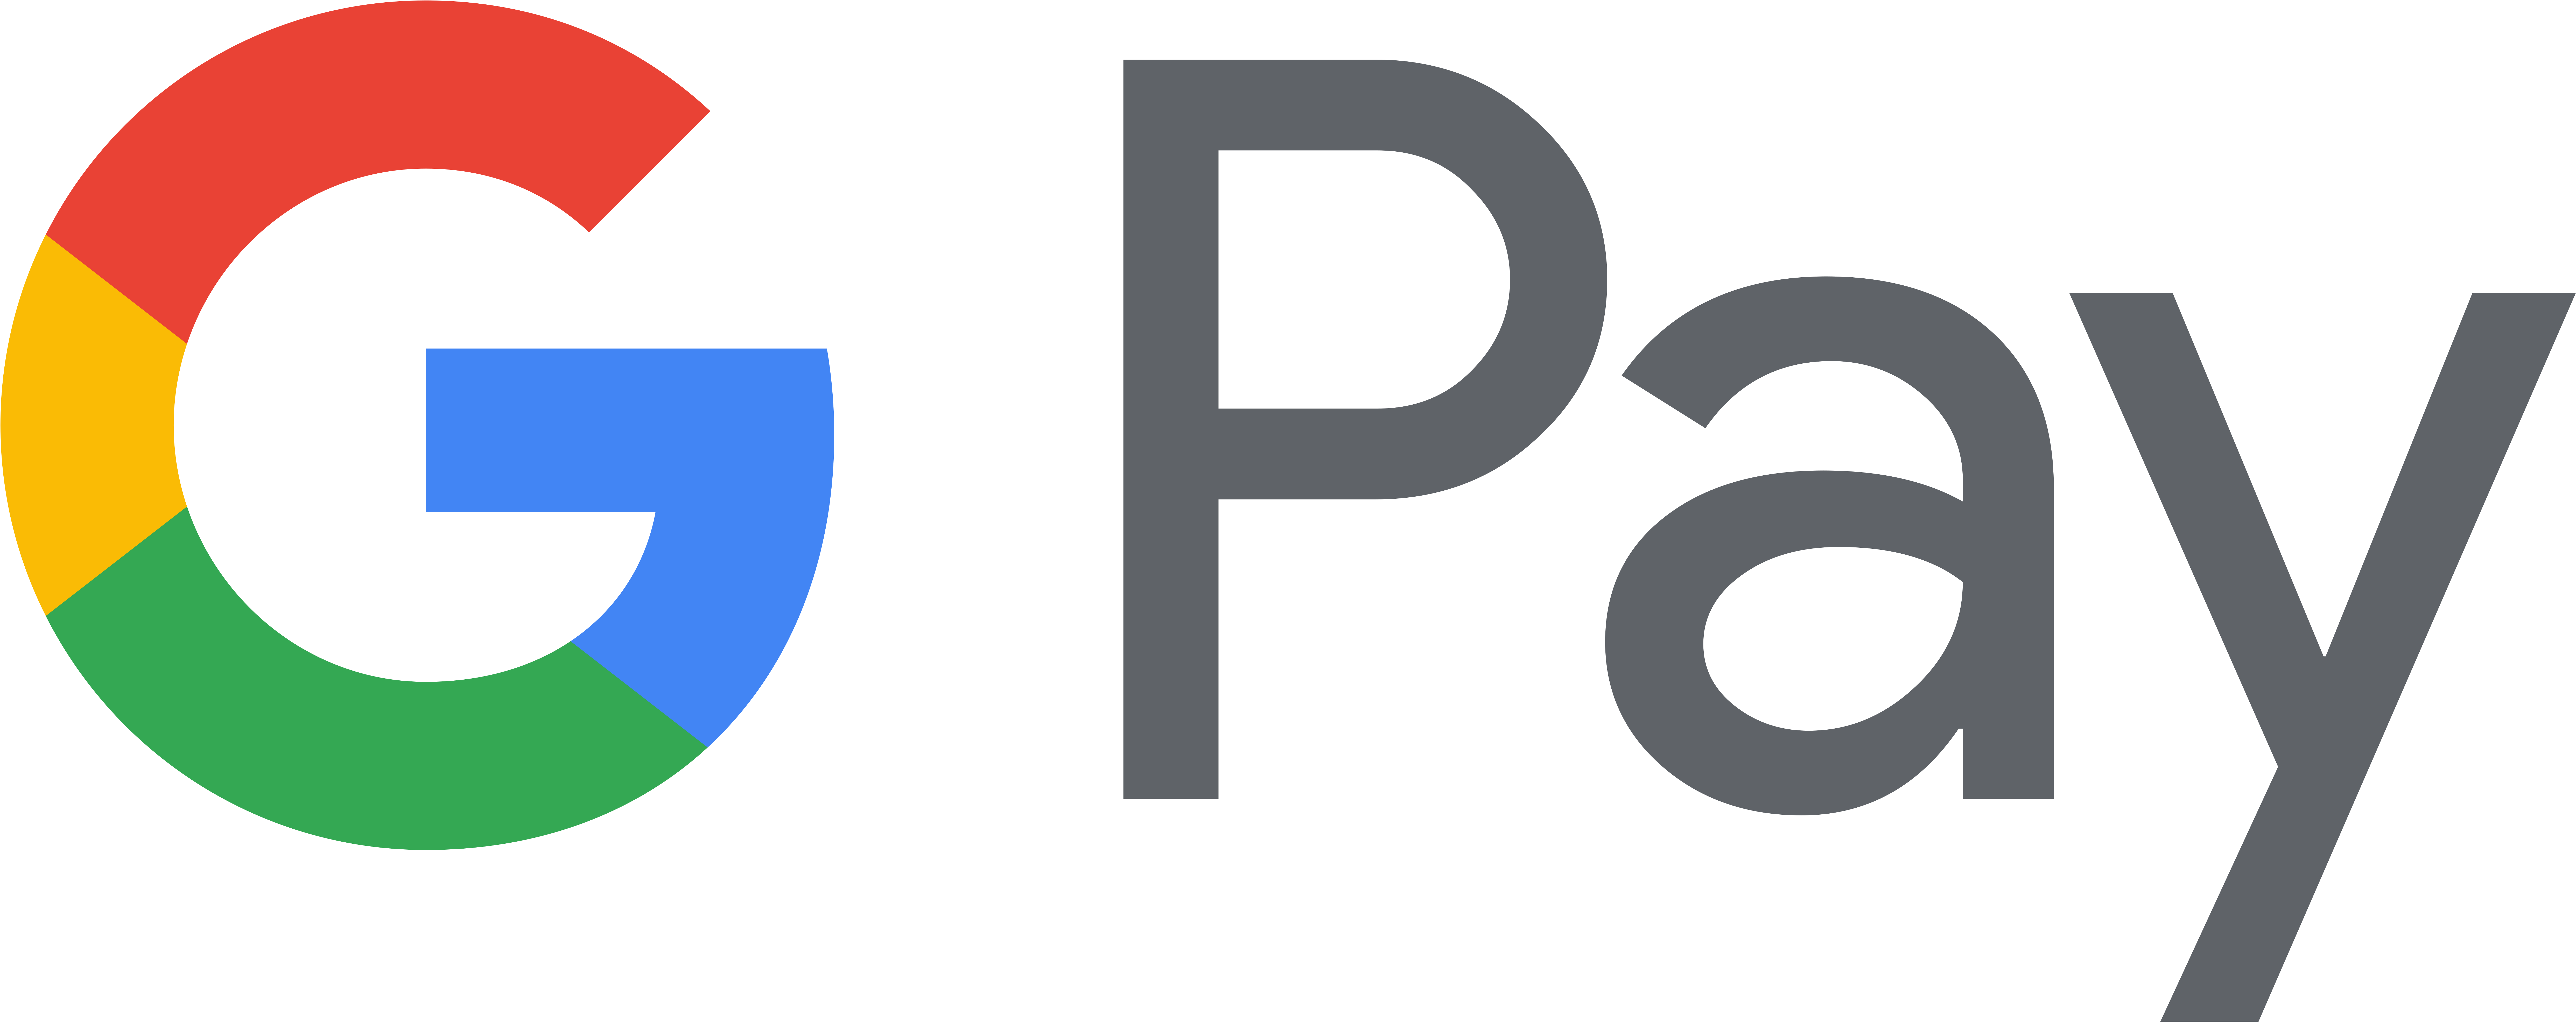 Google Pay Logo - Google Pay (10000x4146)